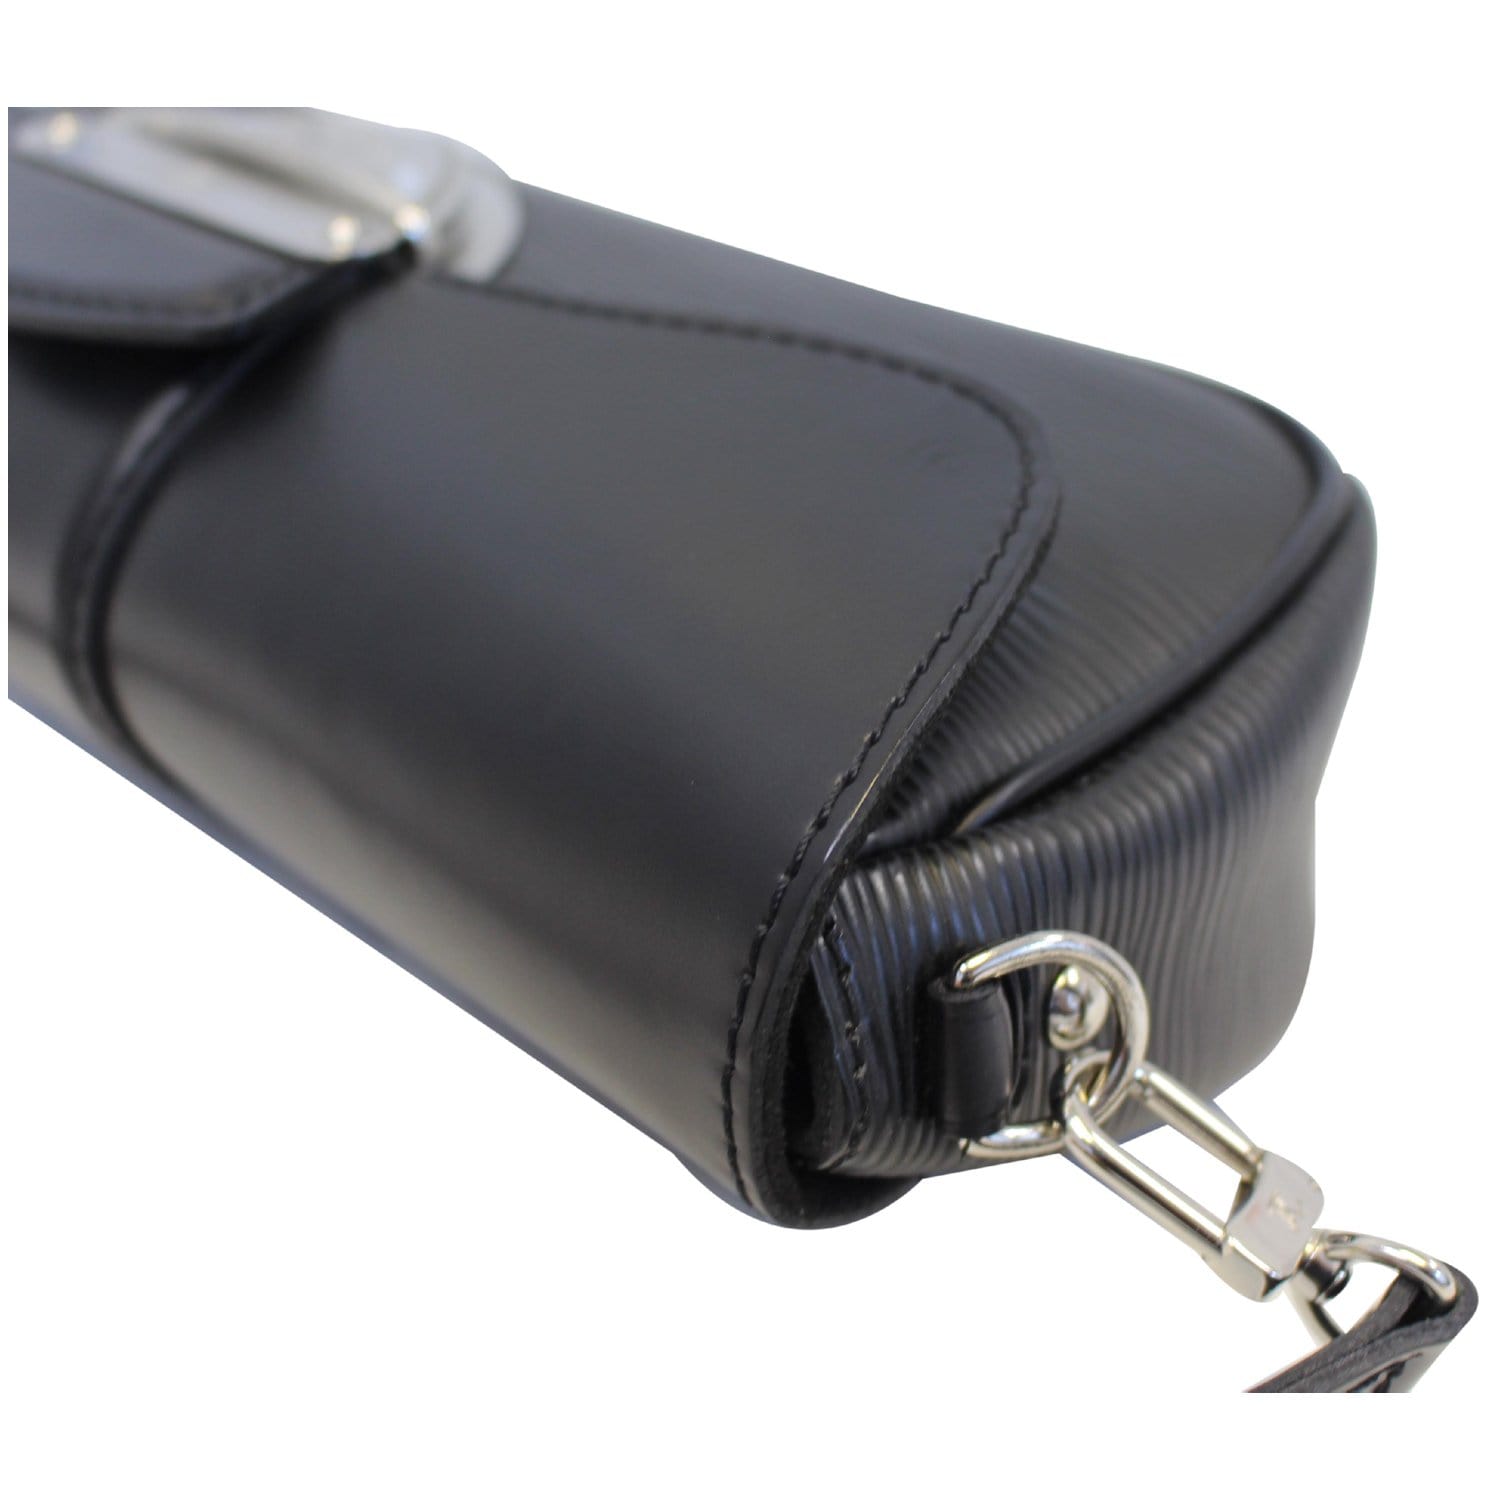 Louis Vuitton Rubis Epi Leather Montaigne Clutch Bag For Sale at